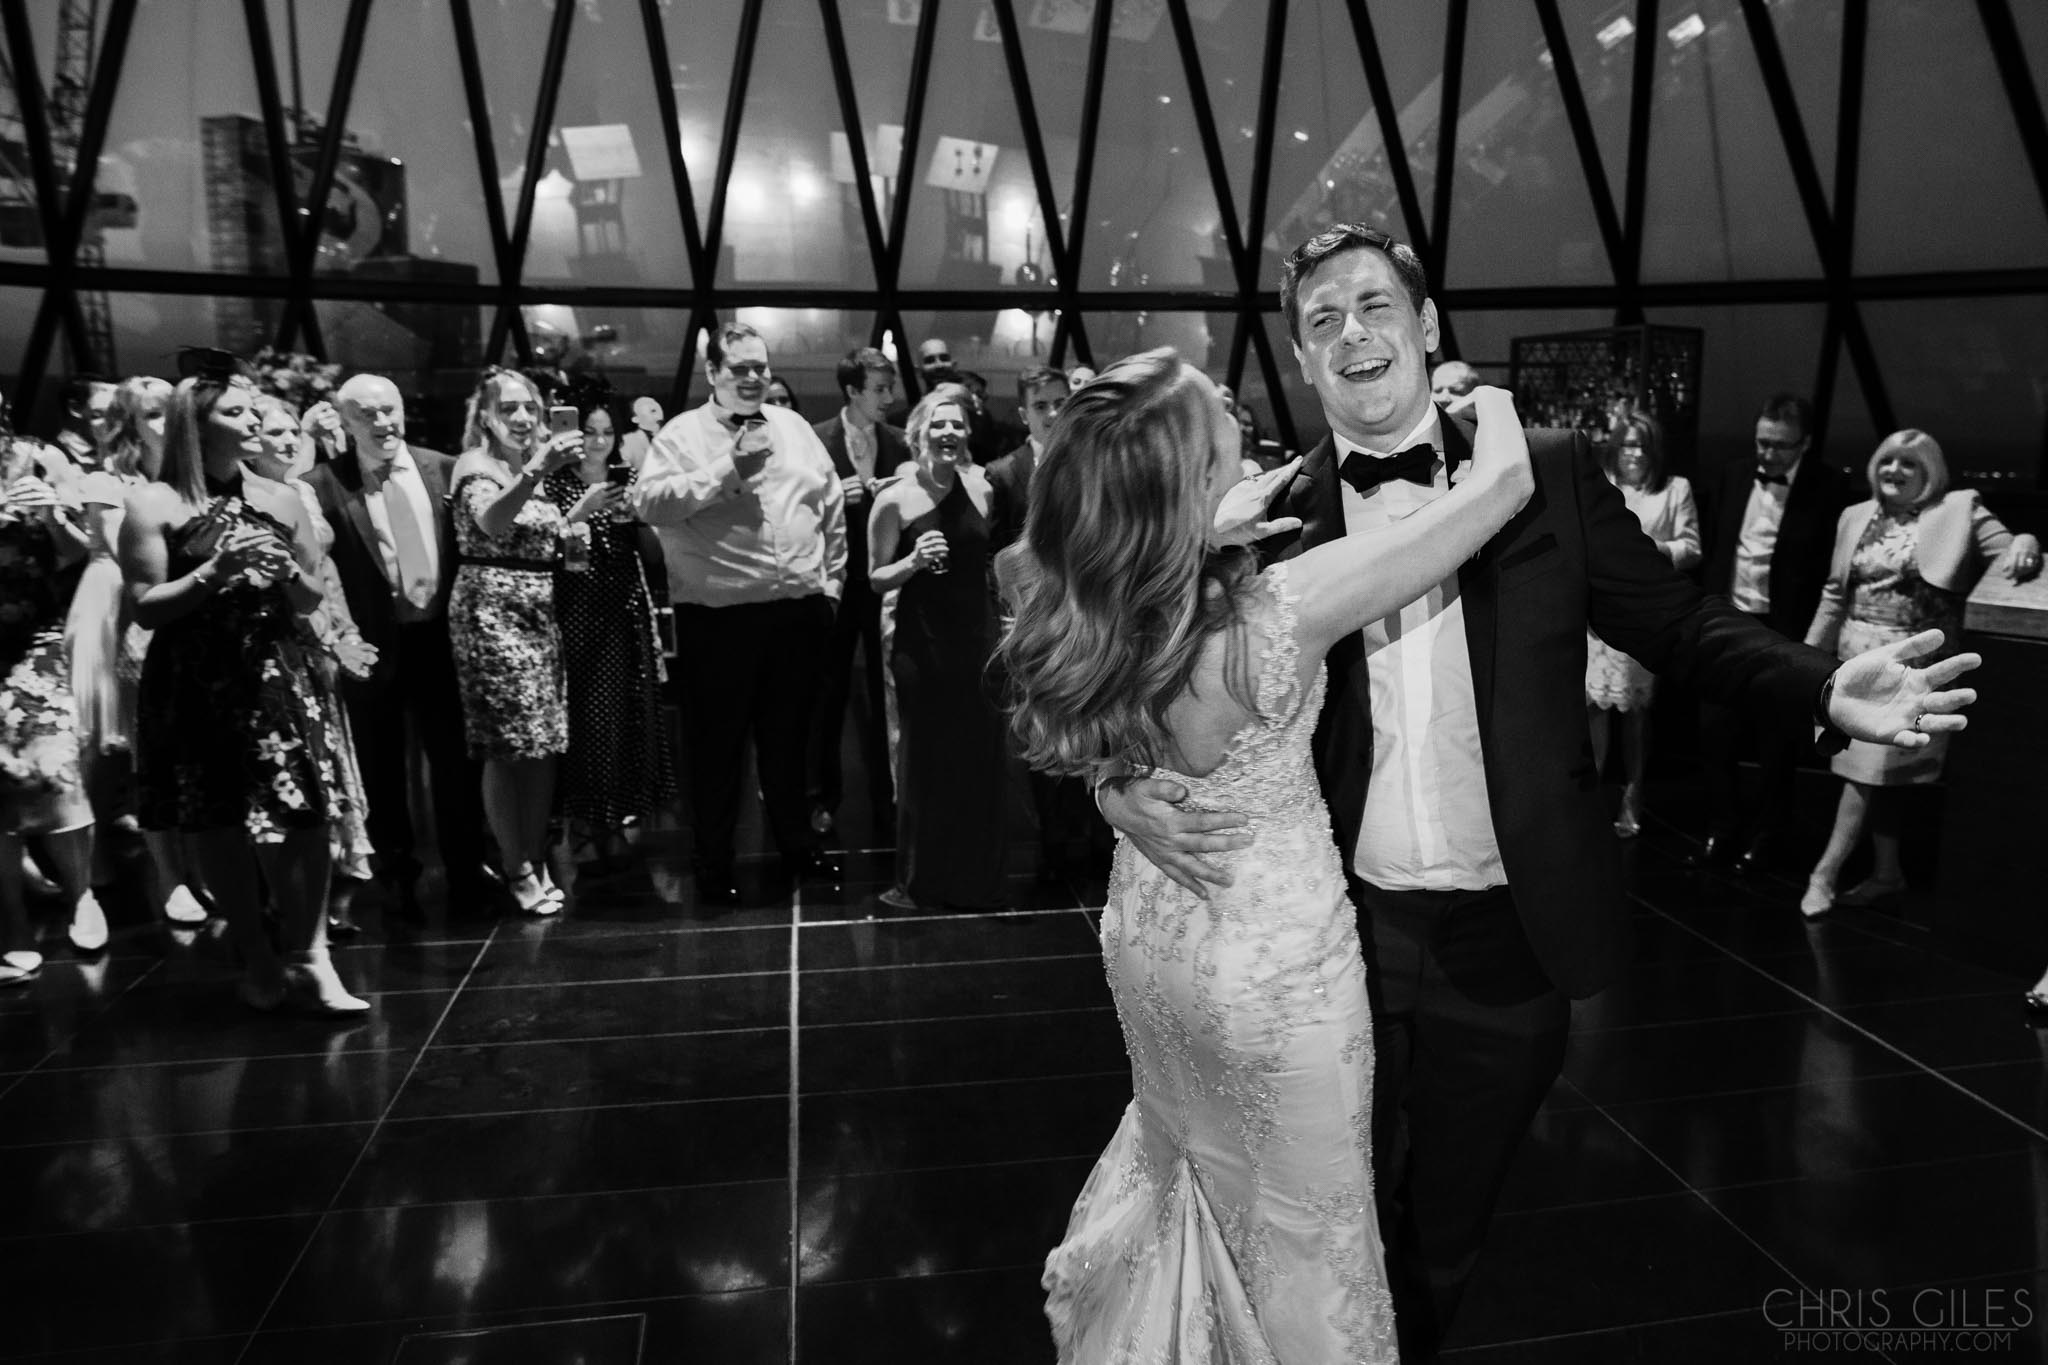 dancefloor at The Gherkin London, entertainment, wedding